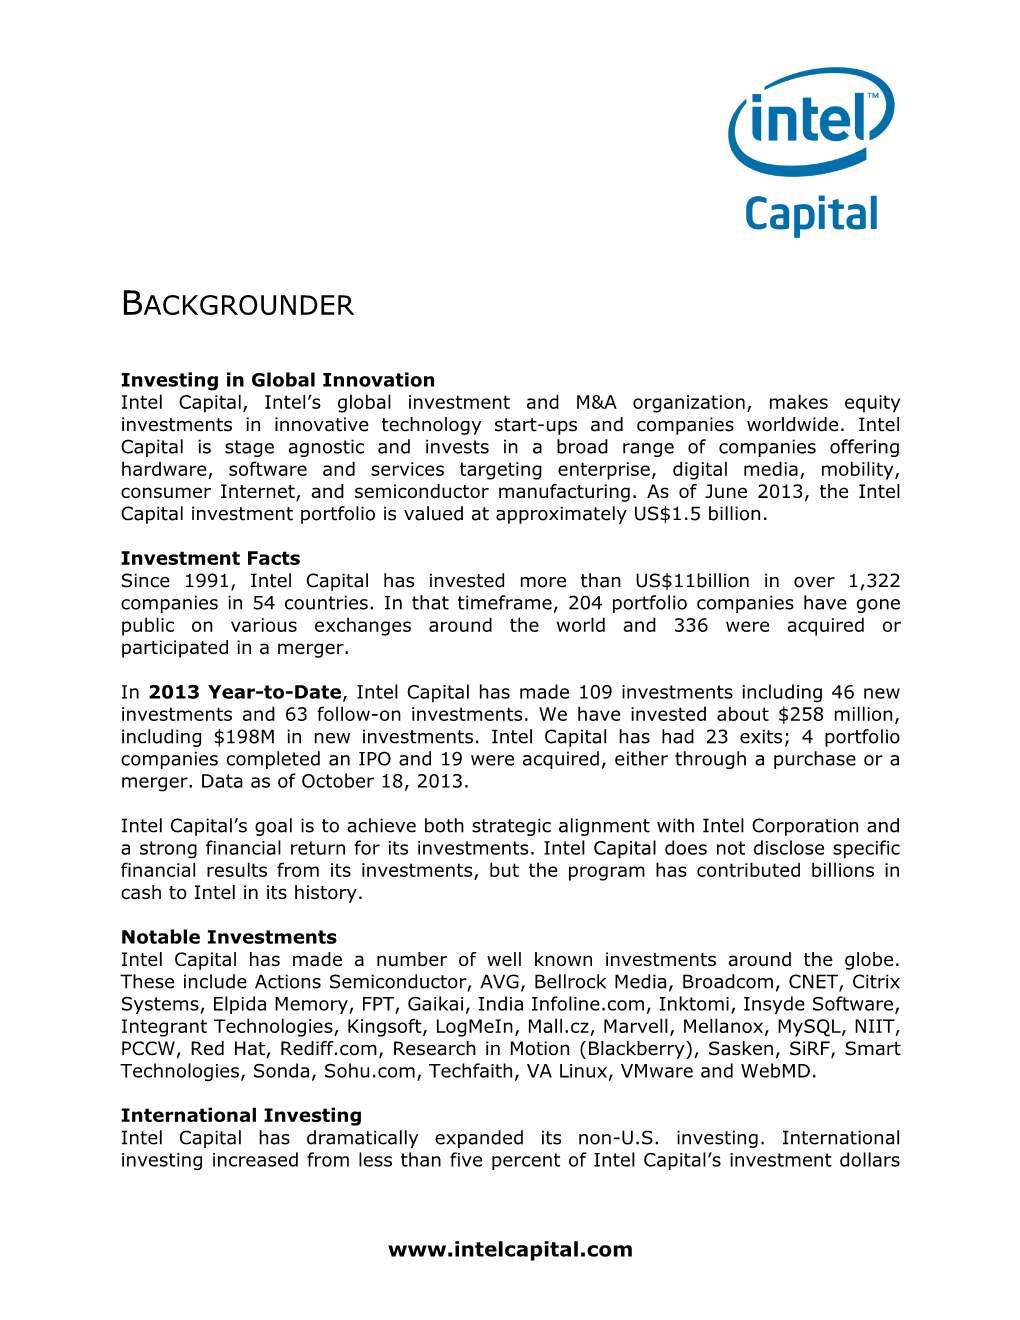 Intel Capital Worldwide Backgrounder